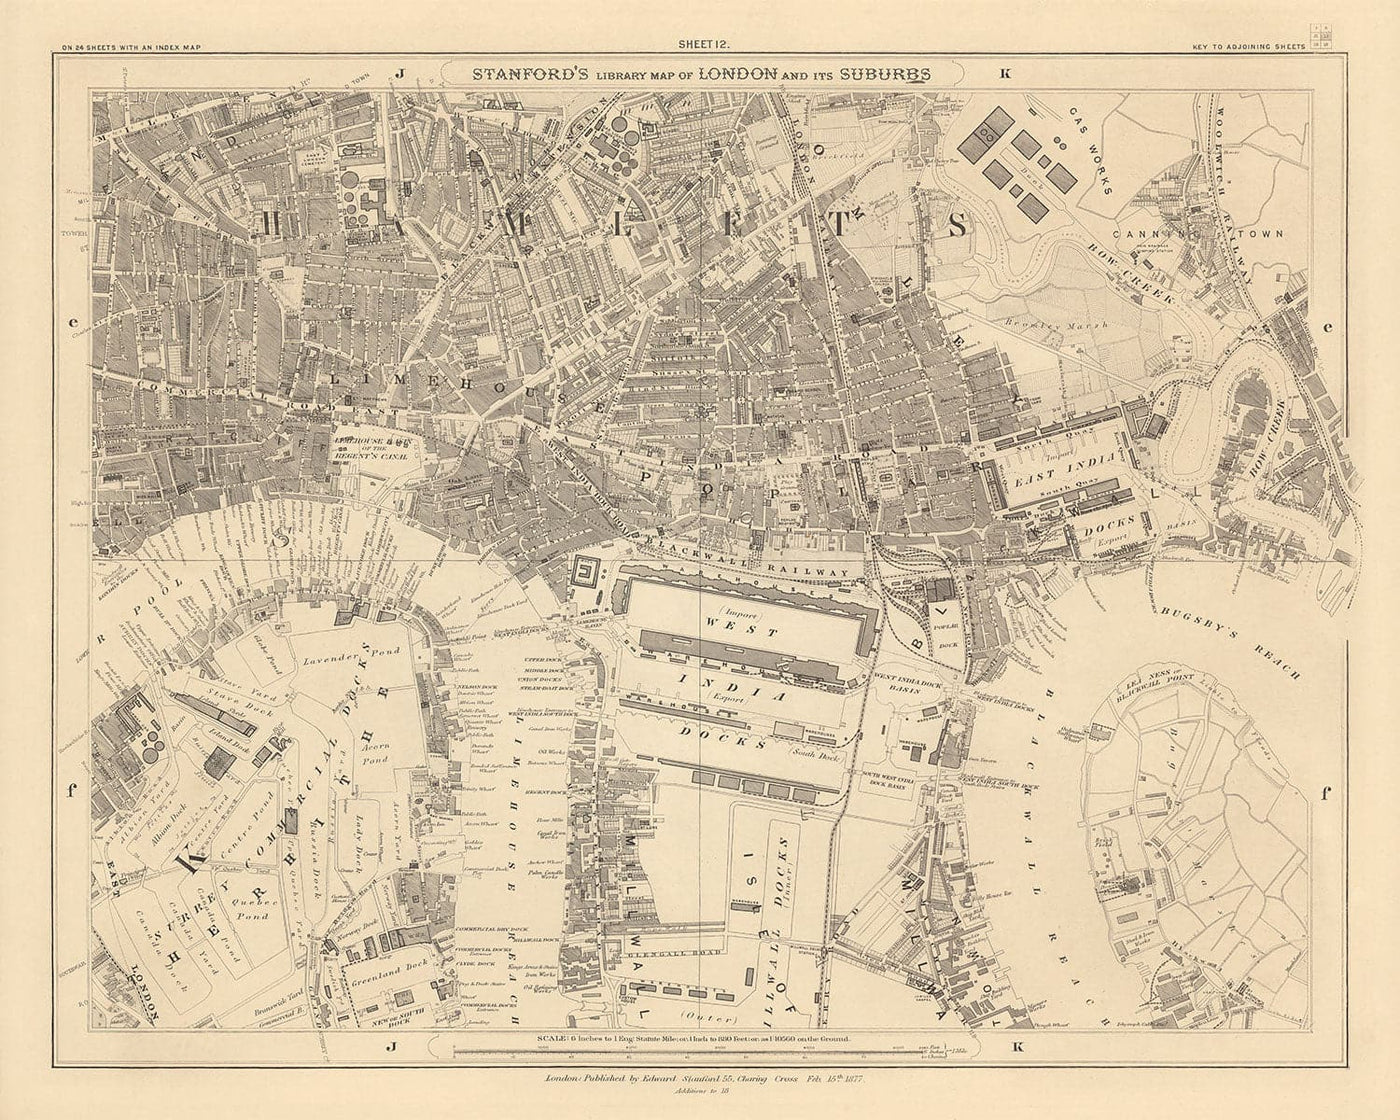 Mapa antiguo de East London en 1862 de Edward Stanford - Isla de Perros, Tower Hamlets, Limehouse, Poplar, Surrey Quays - E1, E3, E14, SE16